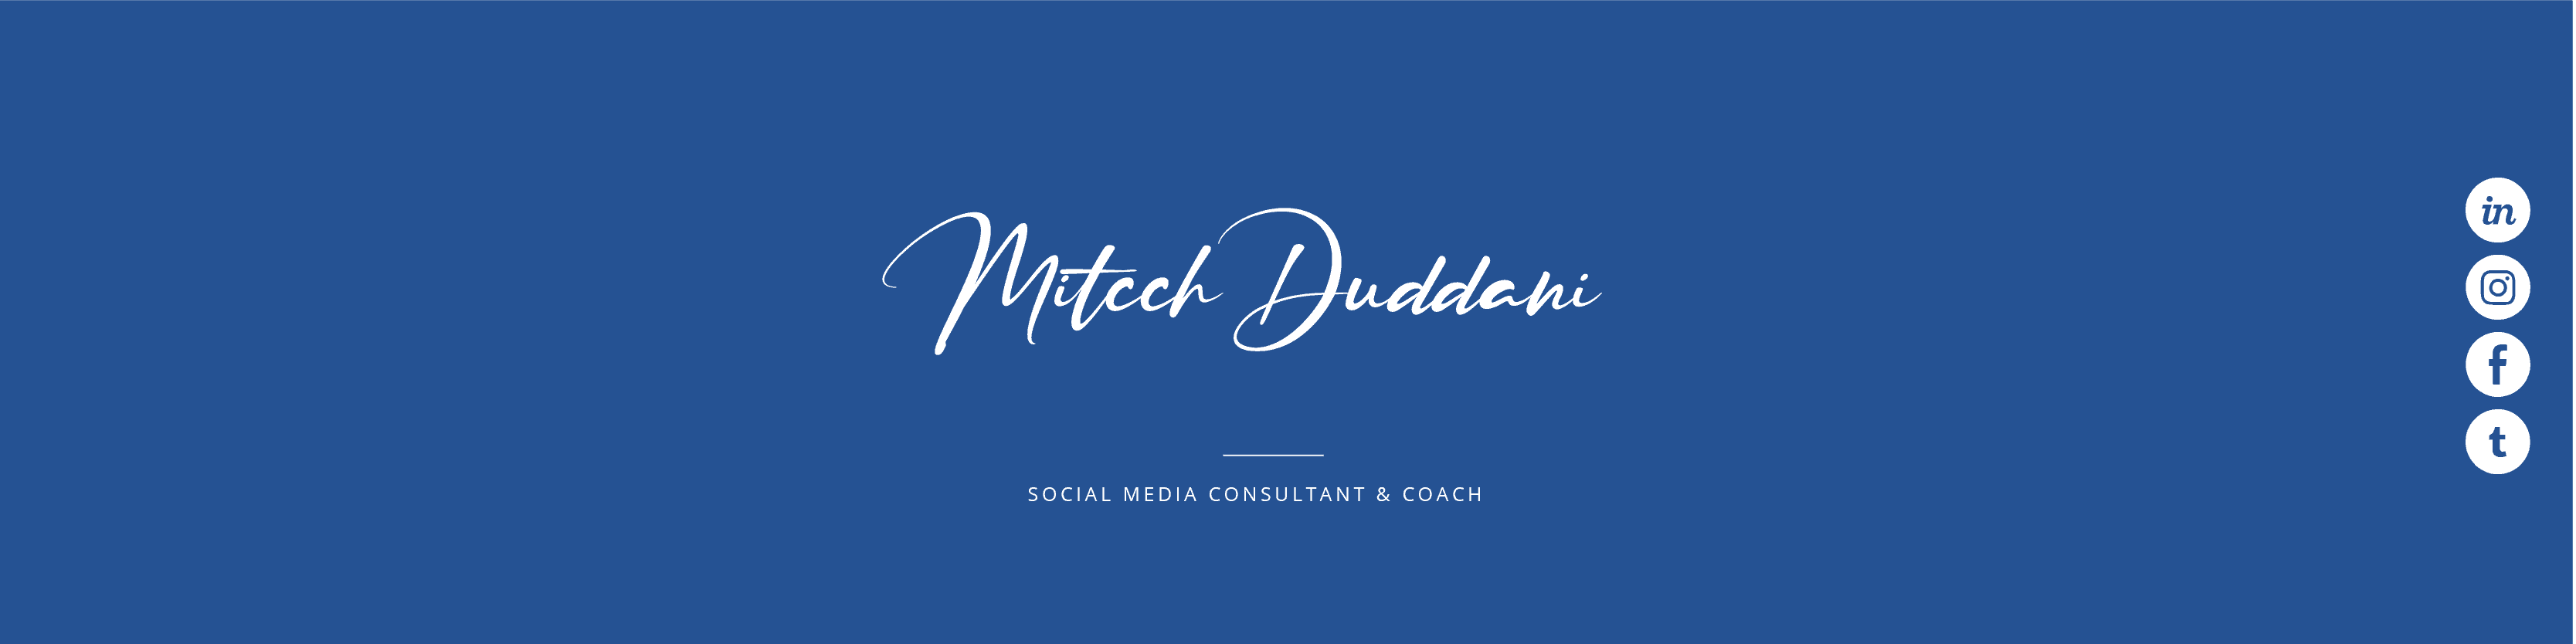 Mitcch Duddani LinkedIn Cover Photo